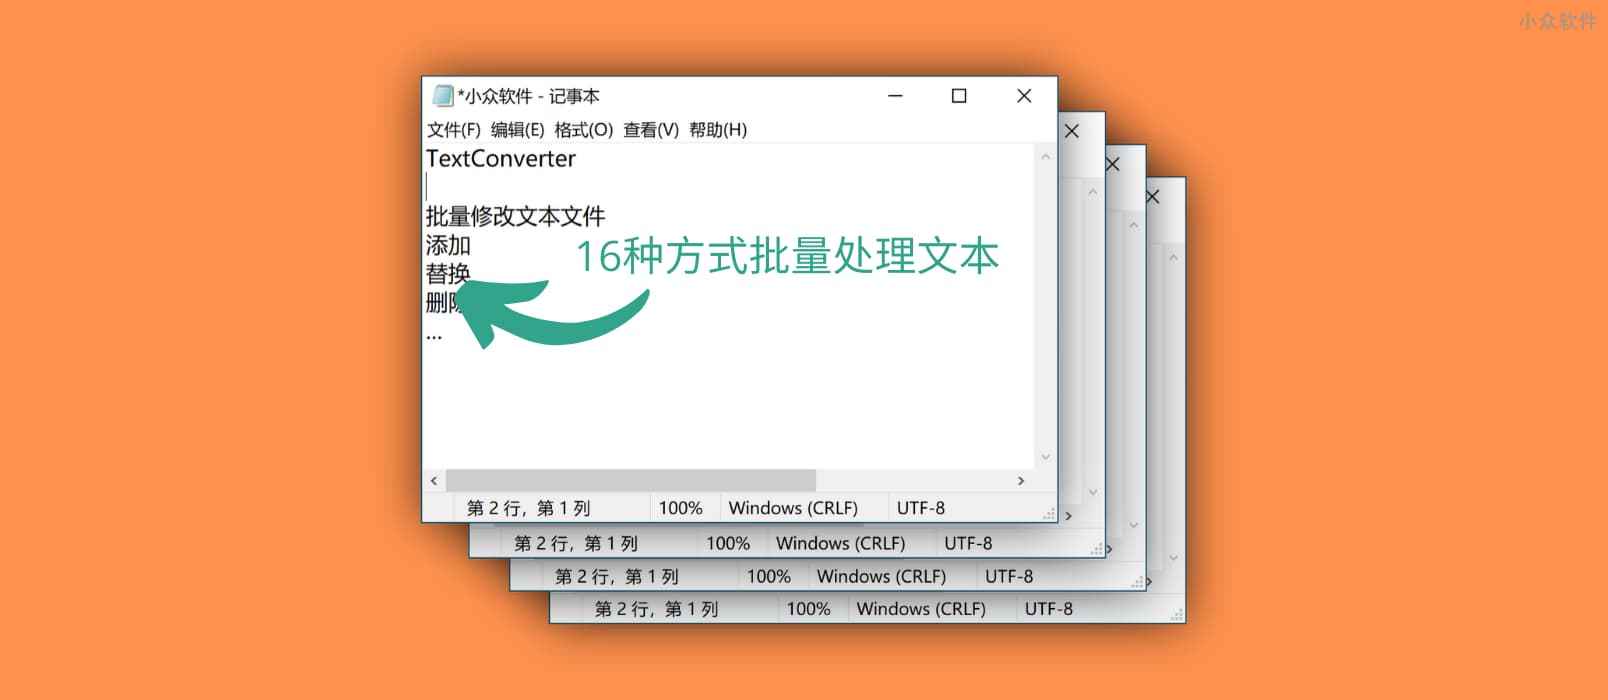 TextConverter – 16 种方式，批量处理文本文件，生产力工具[Windows]